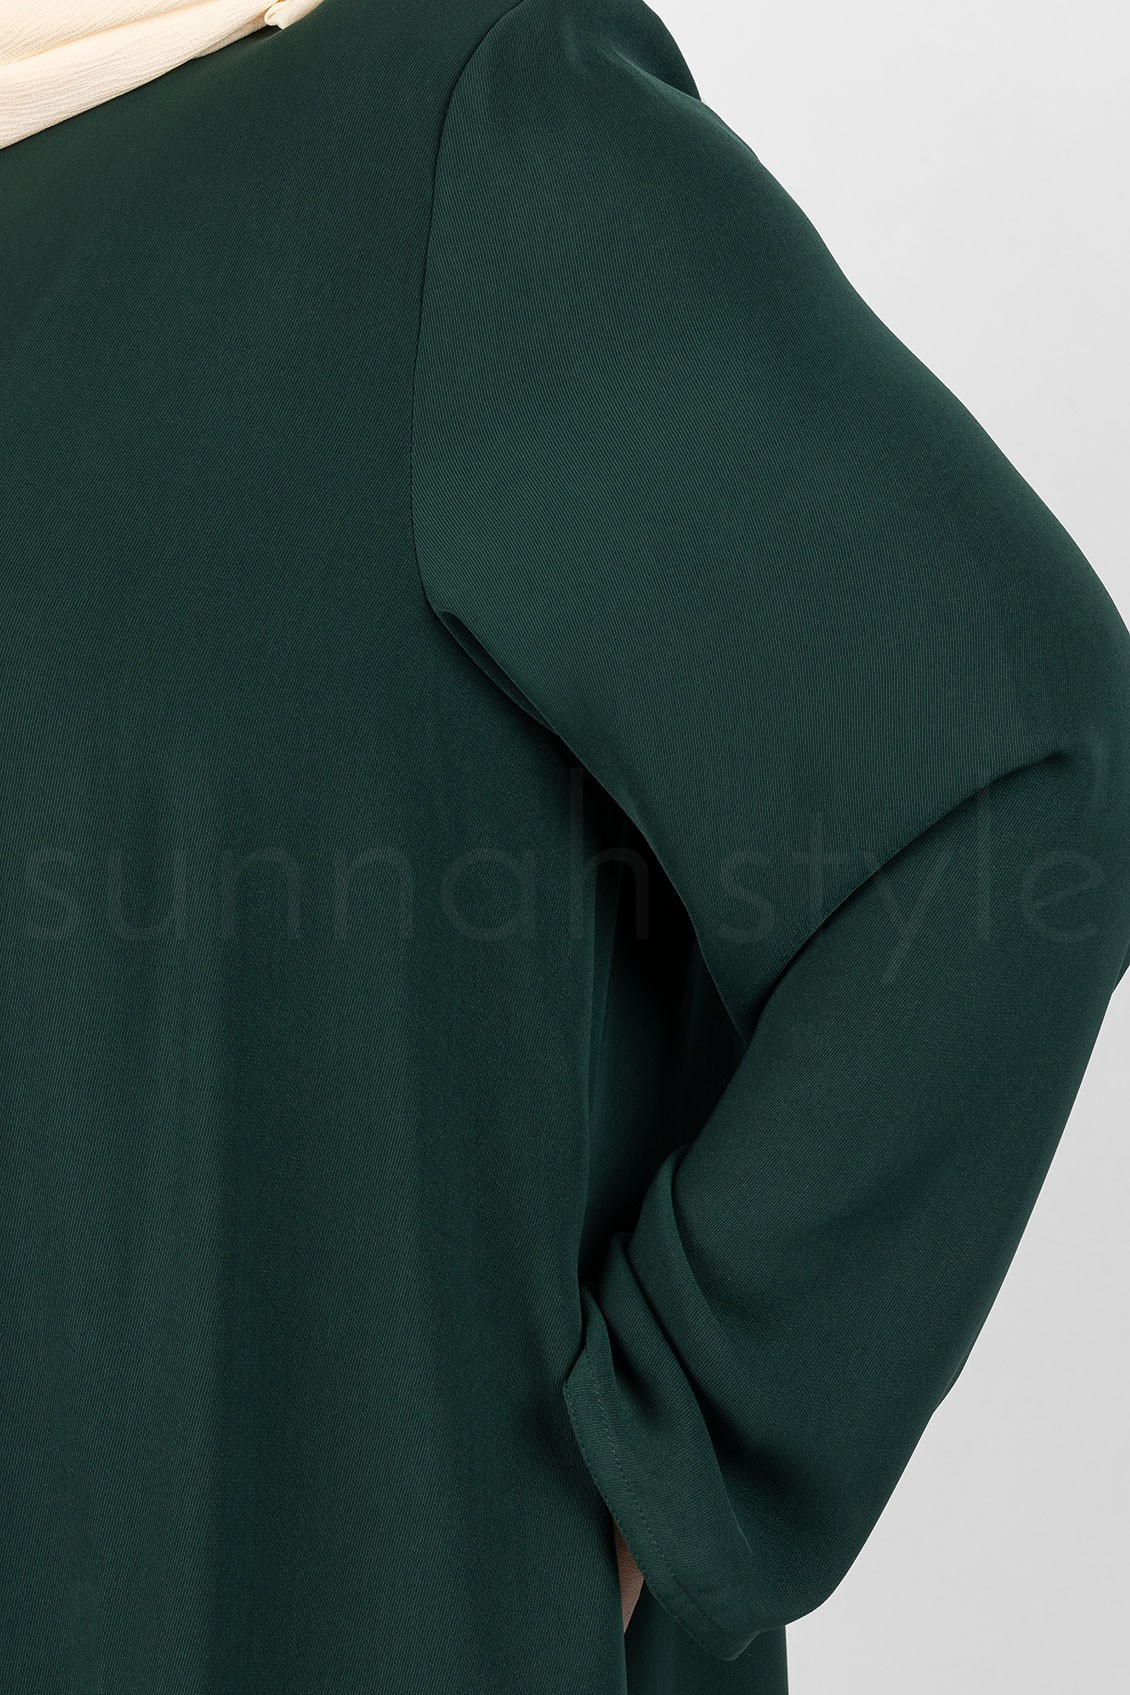 Sunnah Style Essentials Closed Abaya Pine